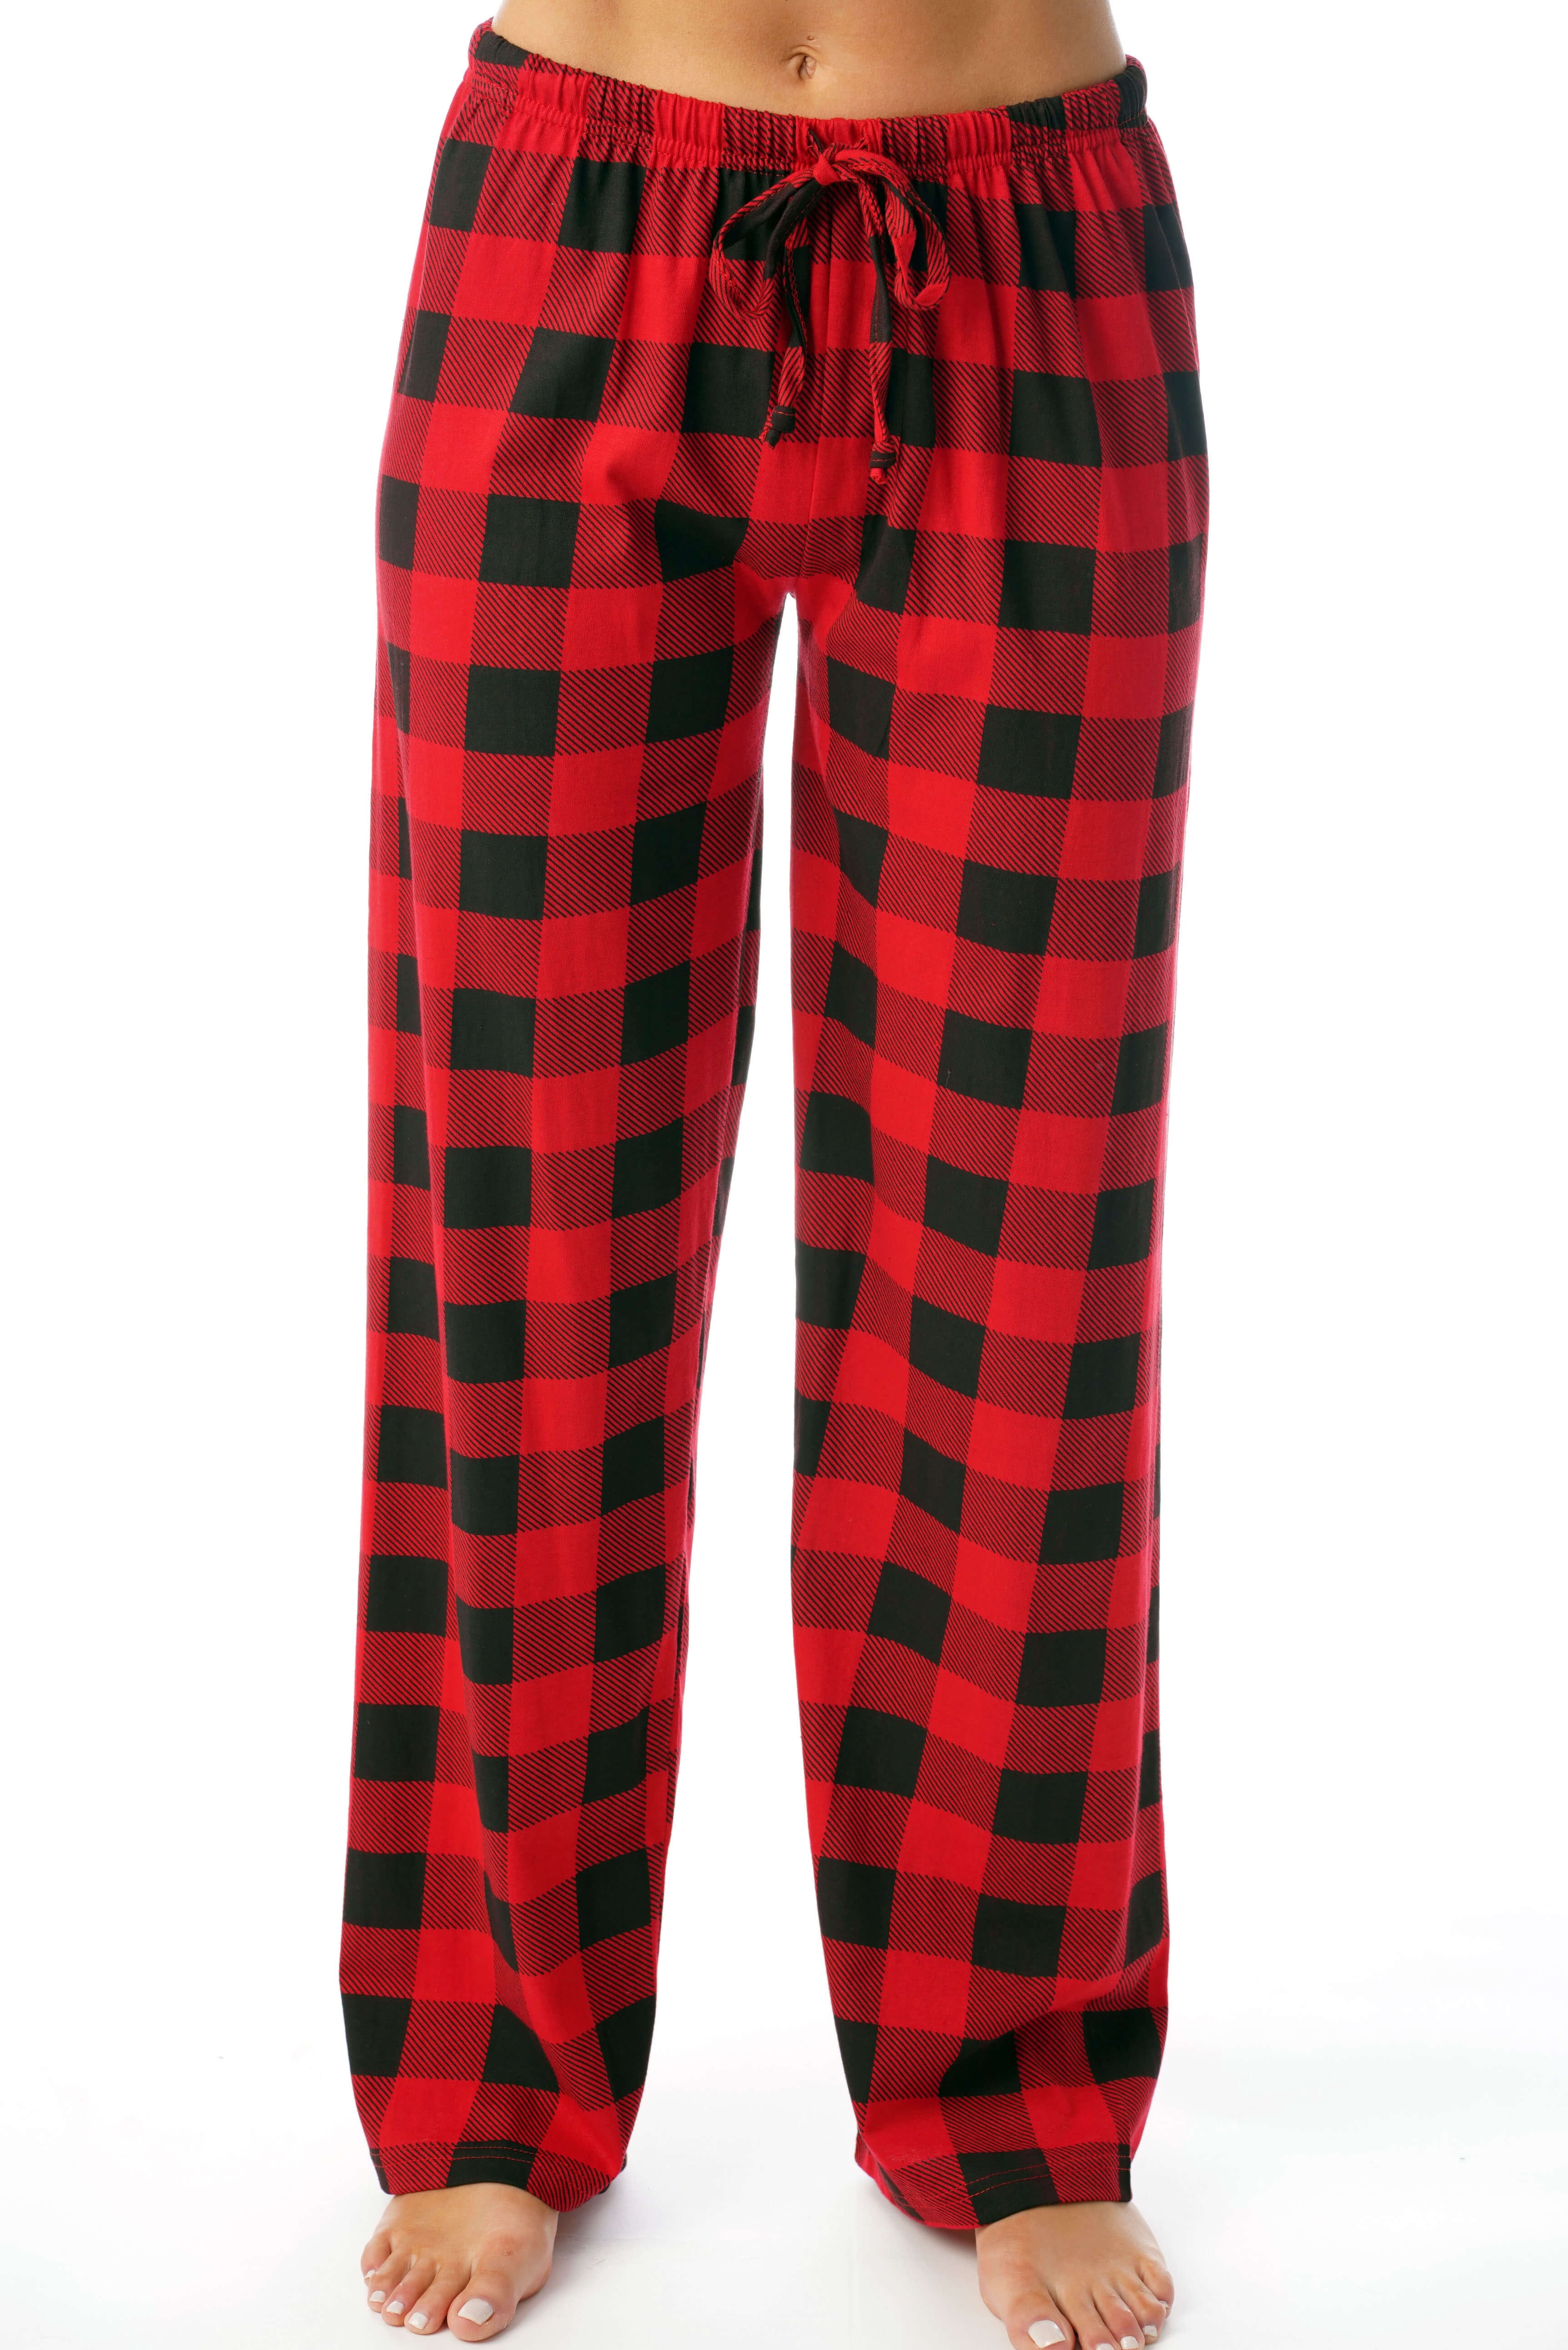 Just Love Women Buffalo Plaid Pajama Pants Sleepwear. (Red Black Buffalo  Plaid, Large)